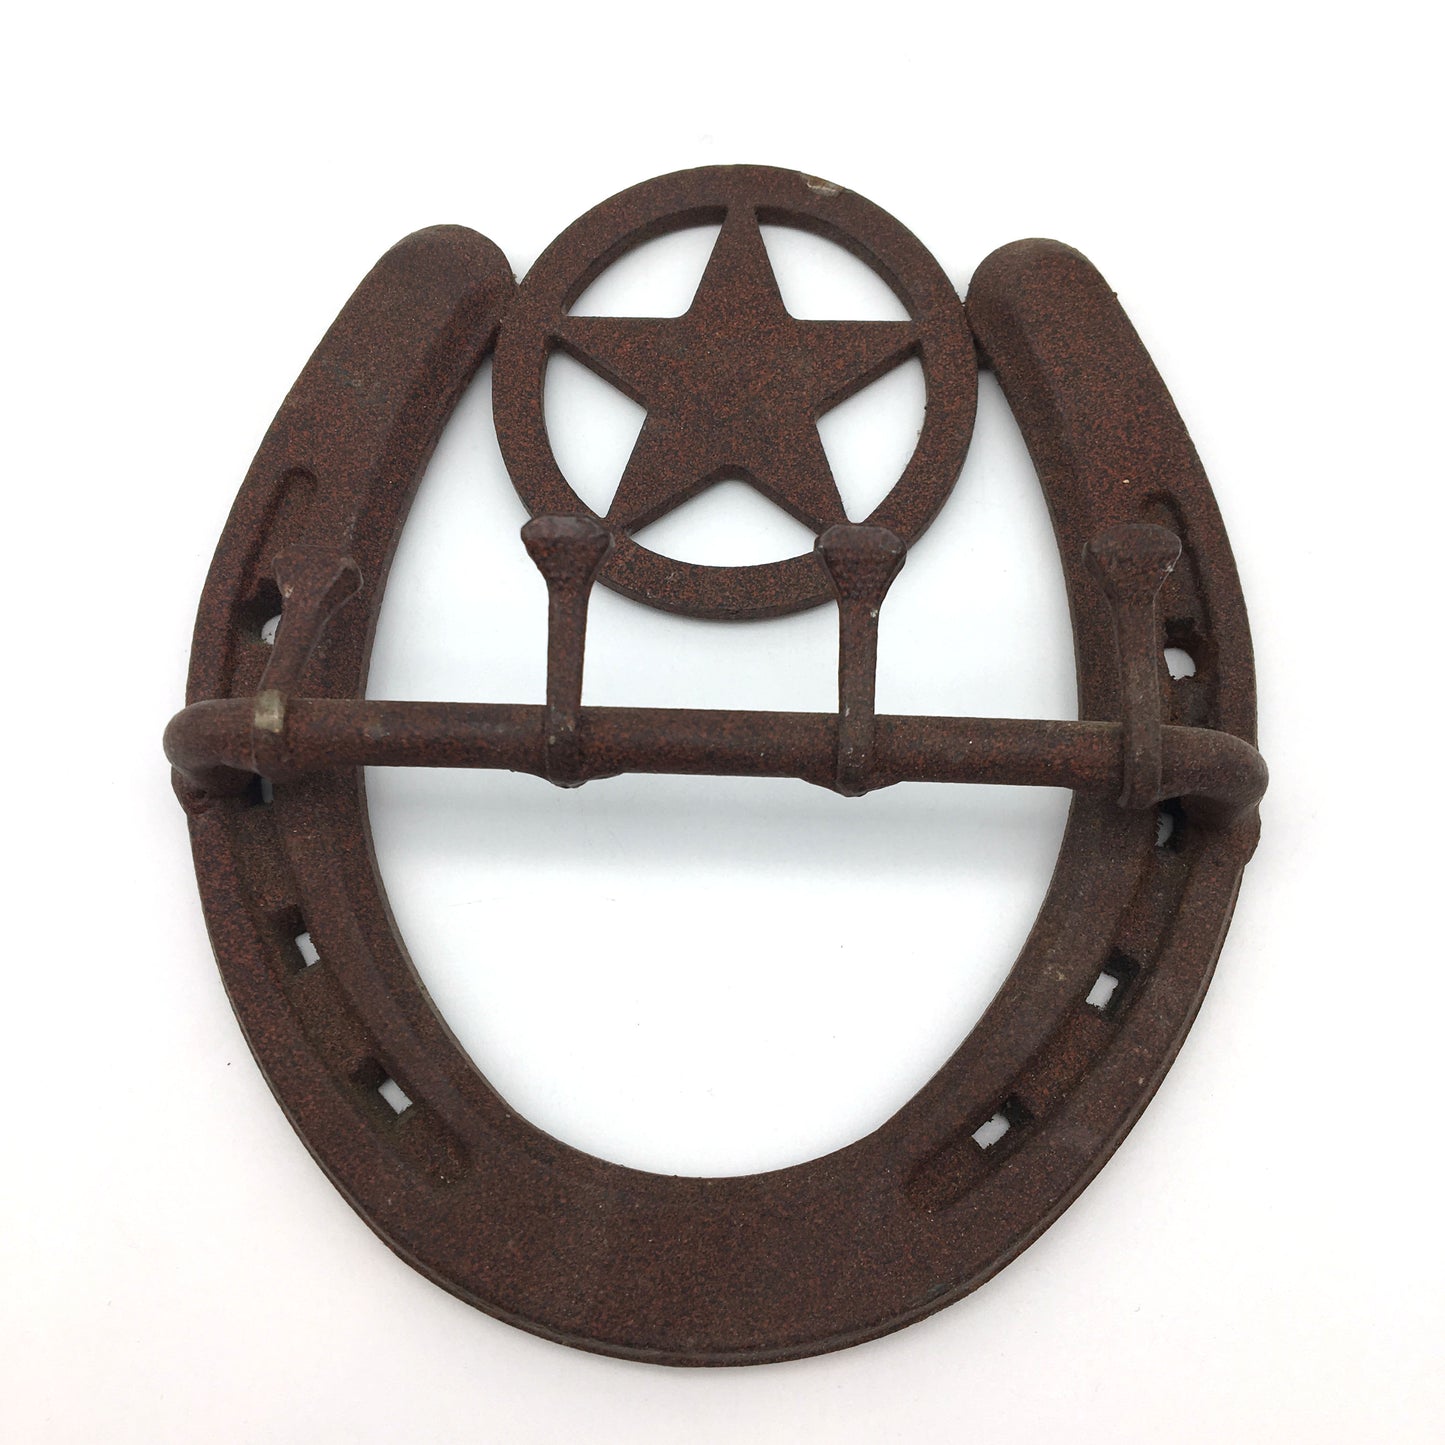 Rustic Western Cast Iron Horshoe Star Mount Hanger Rack- Handmade - 4 hooks